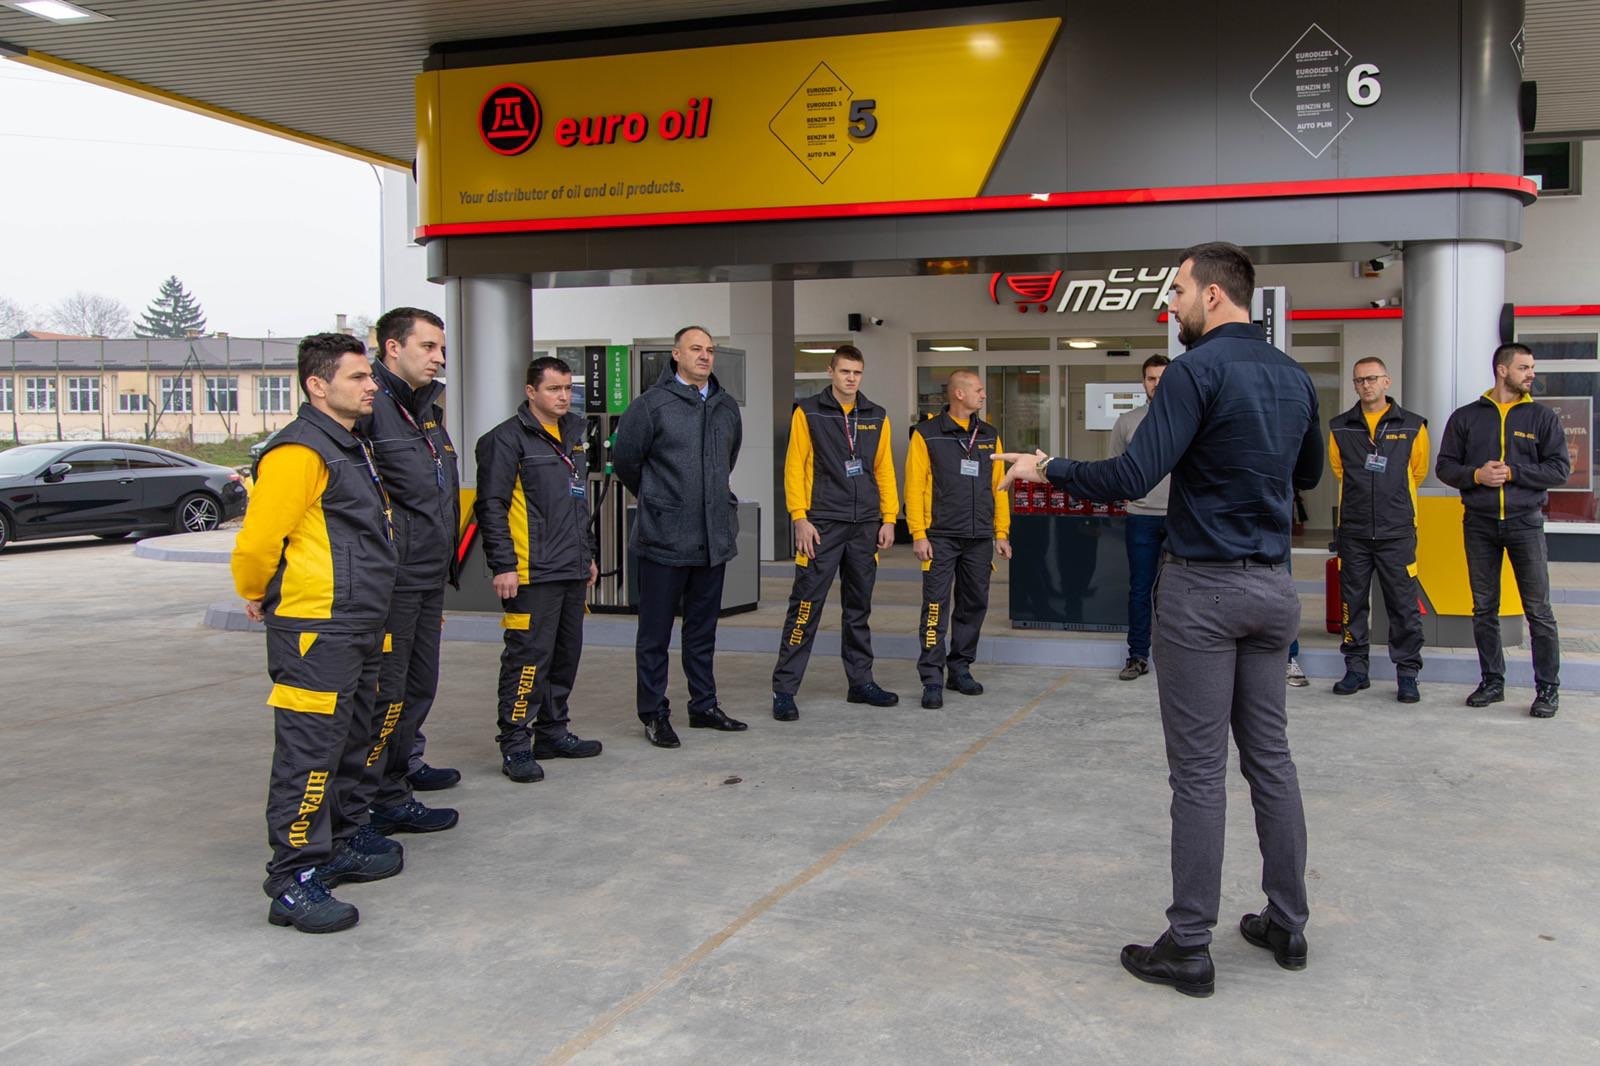 U Maglaju svečano otvorena 11. benzinska pumpa Hifa Oil - Euro Oil